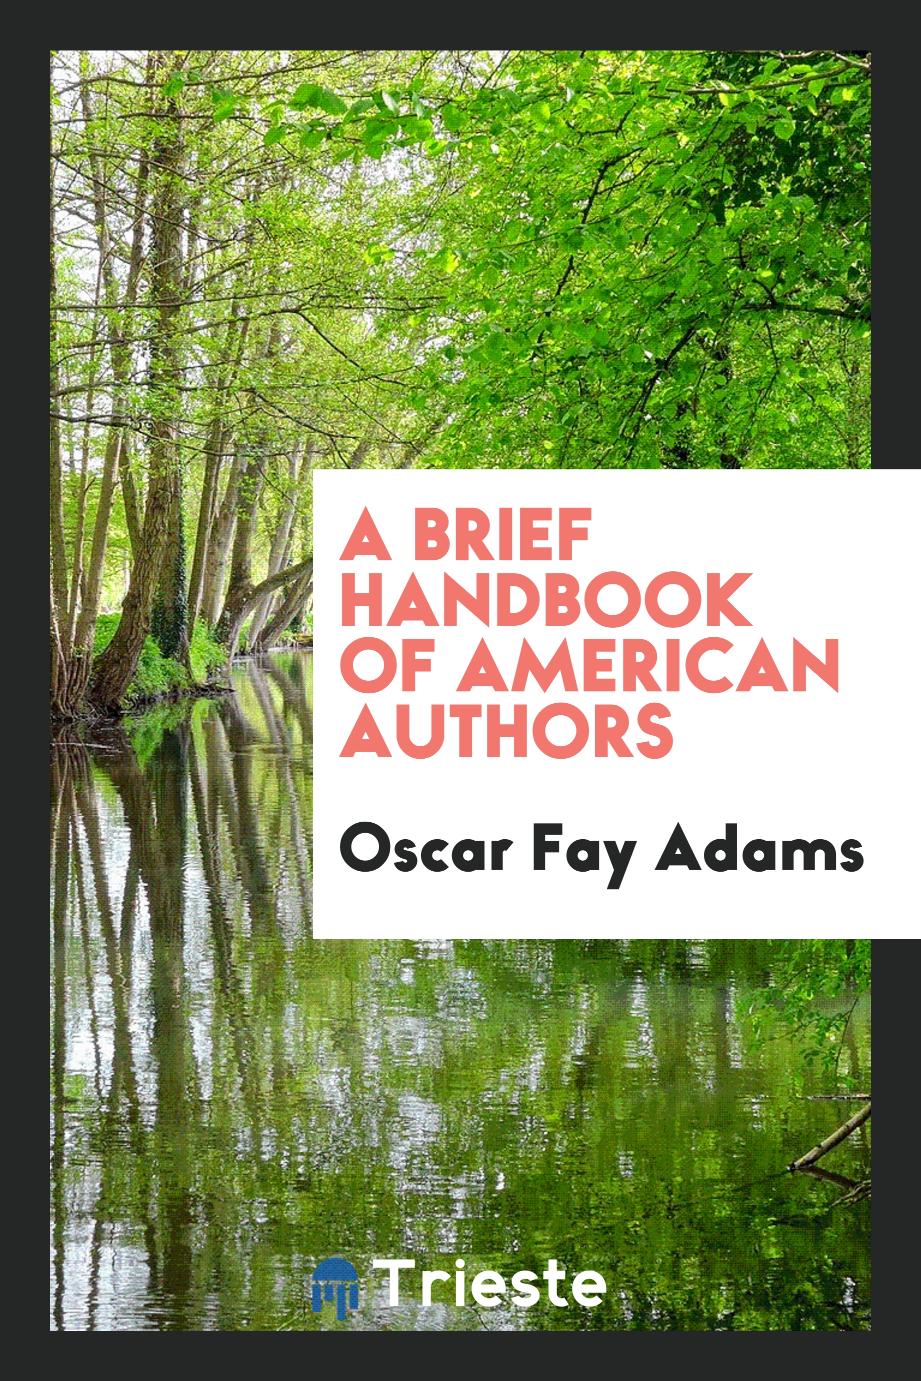 A brief handbook of American authors